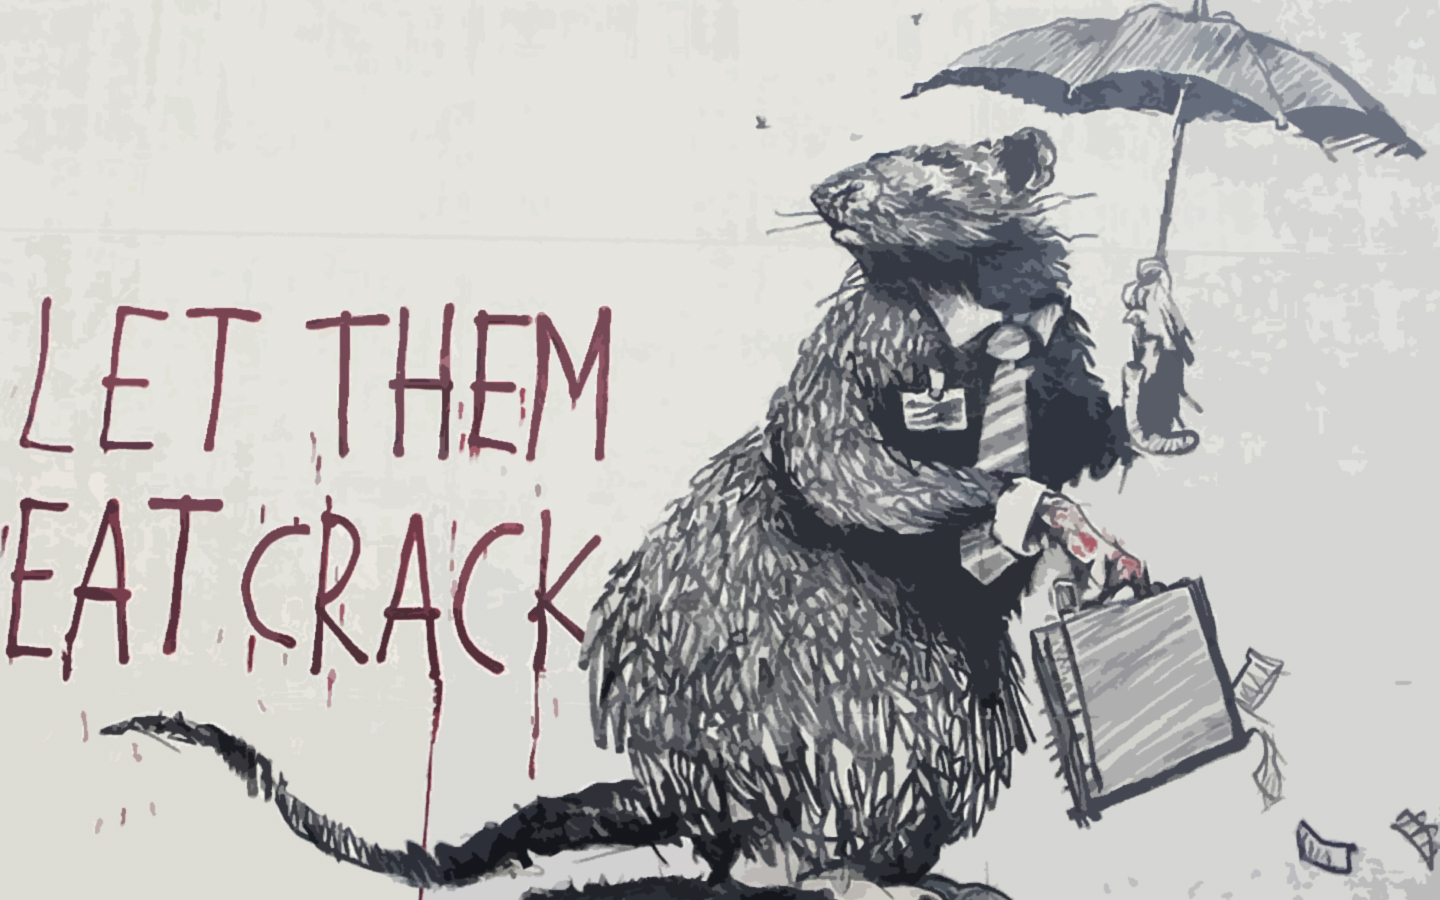 Banksy Street Wallpaper Art